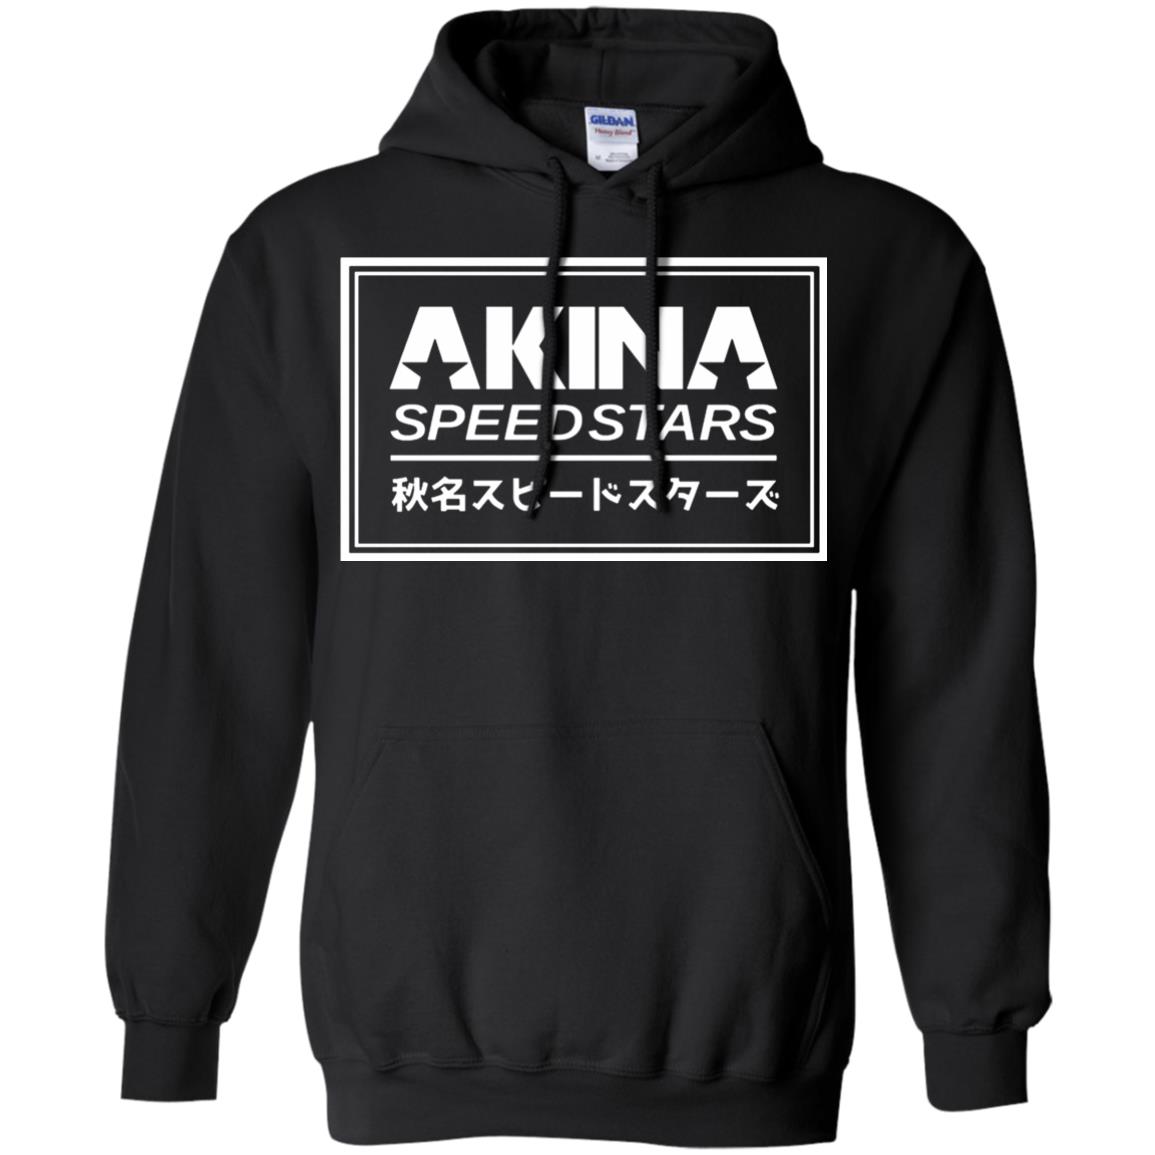 akina speed stars hoodie - black